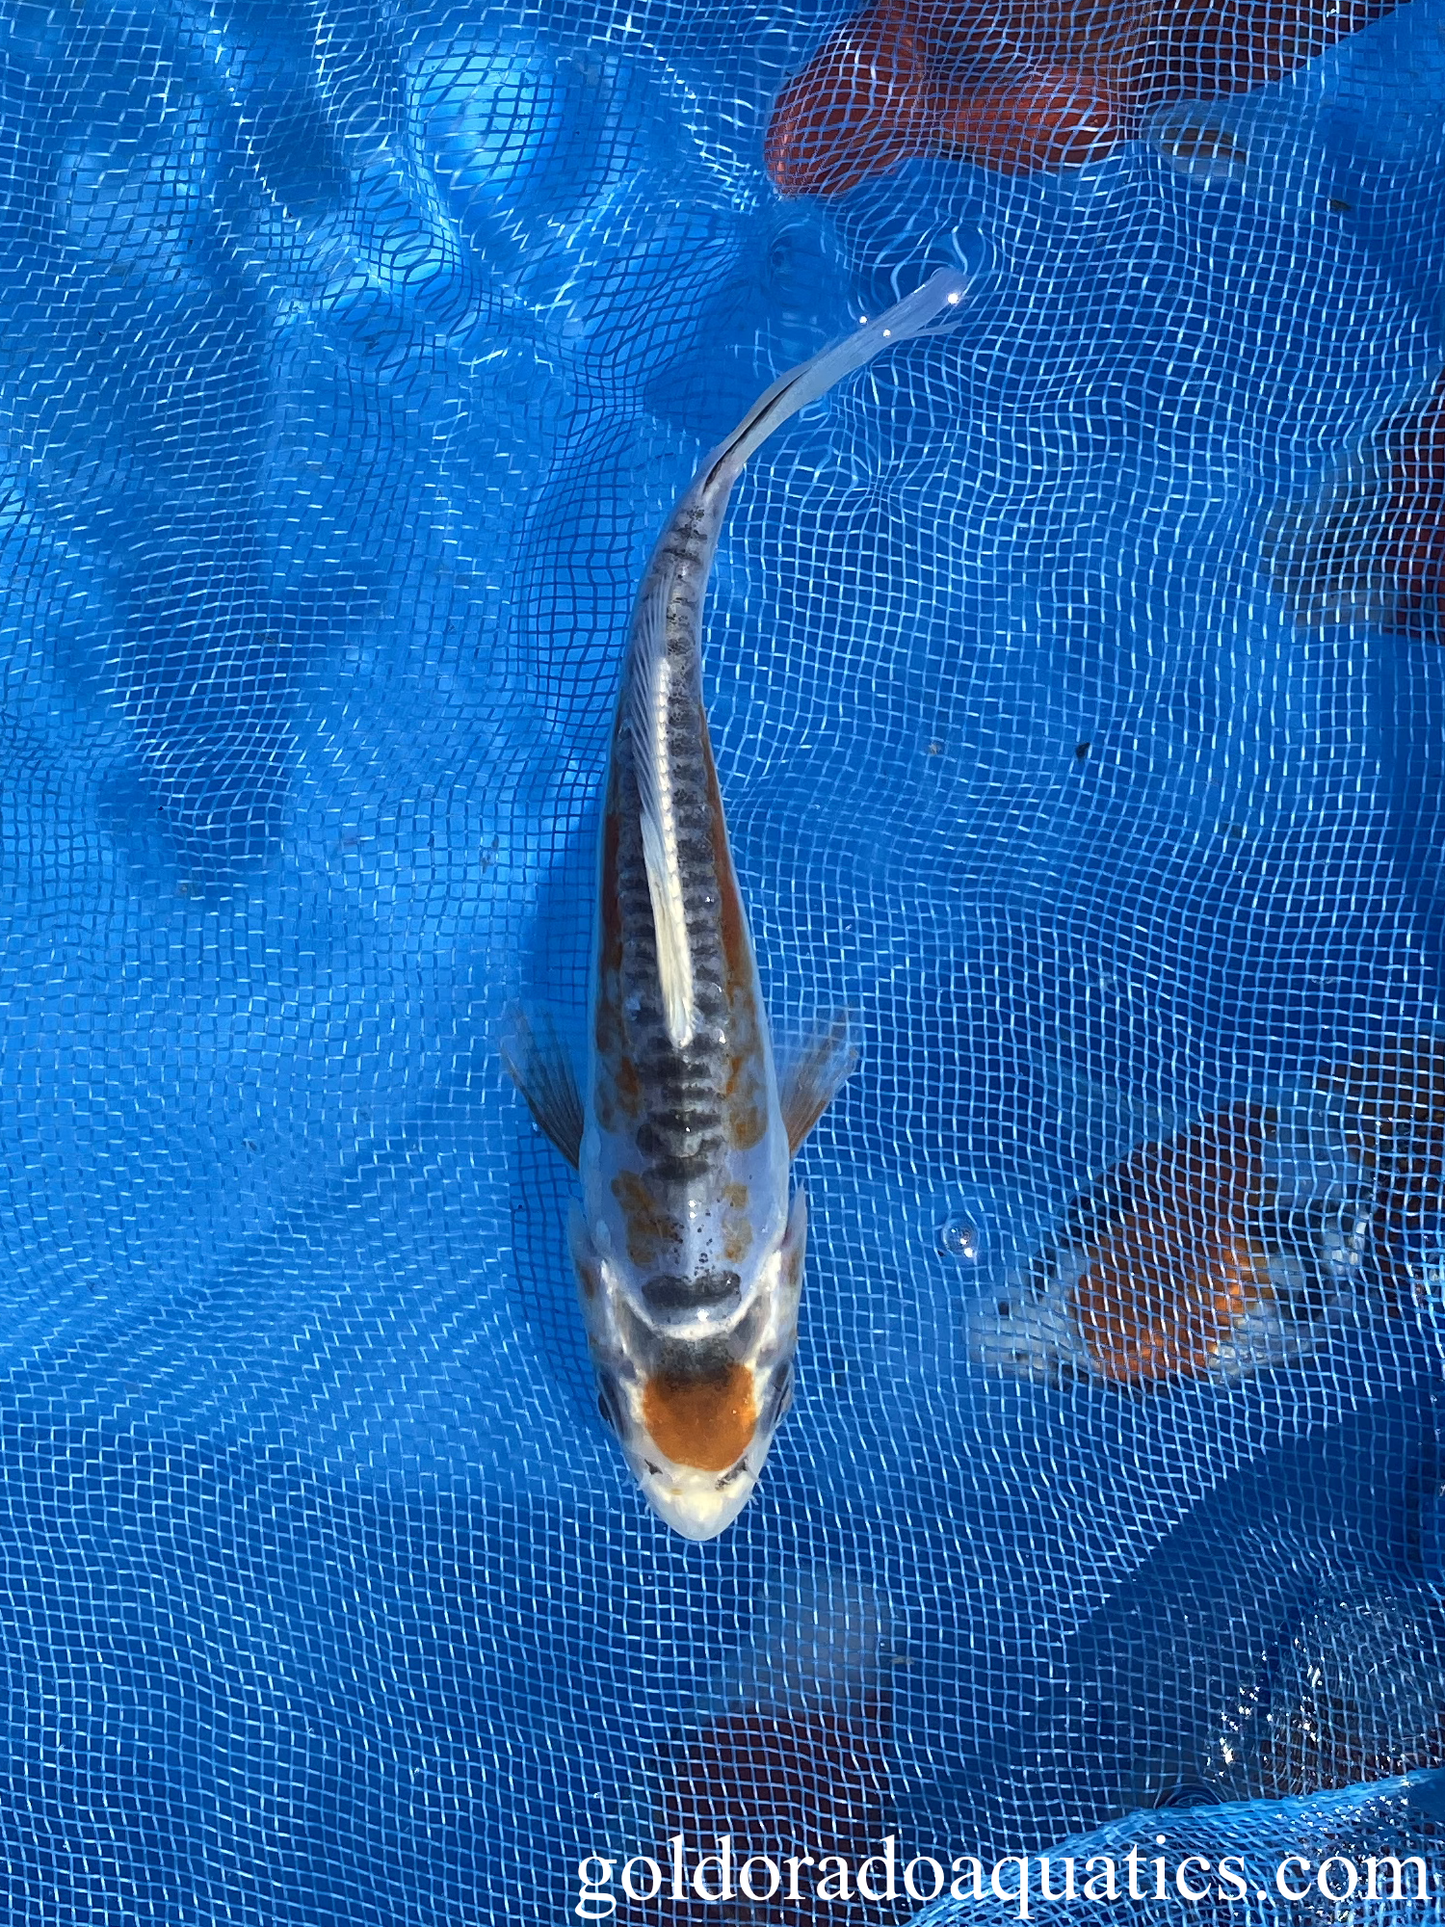 Image of a Tancho Kikokuryu koi fish. A metallic scaleless black and white colored koi fish.